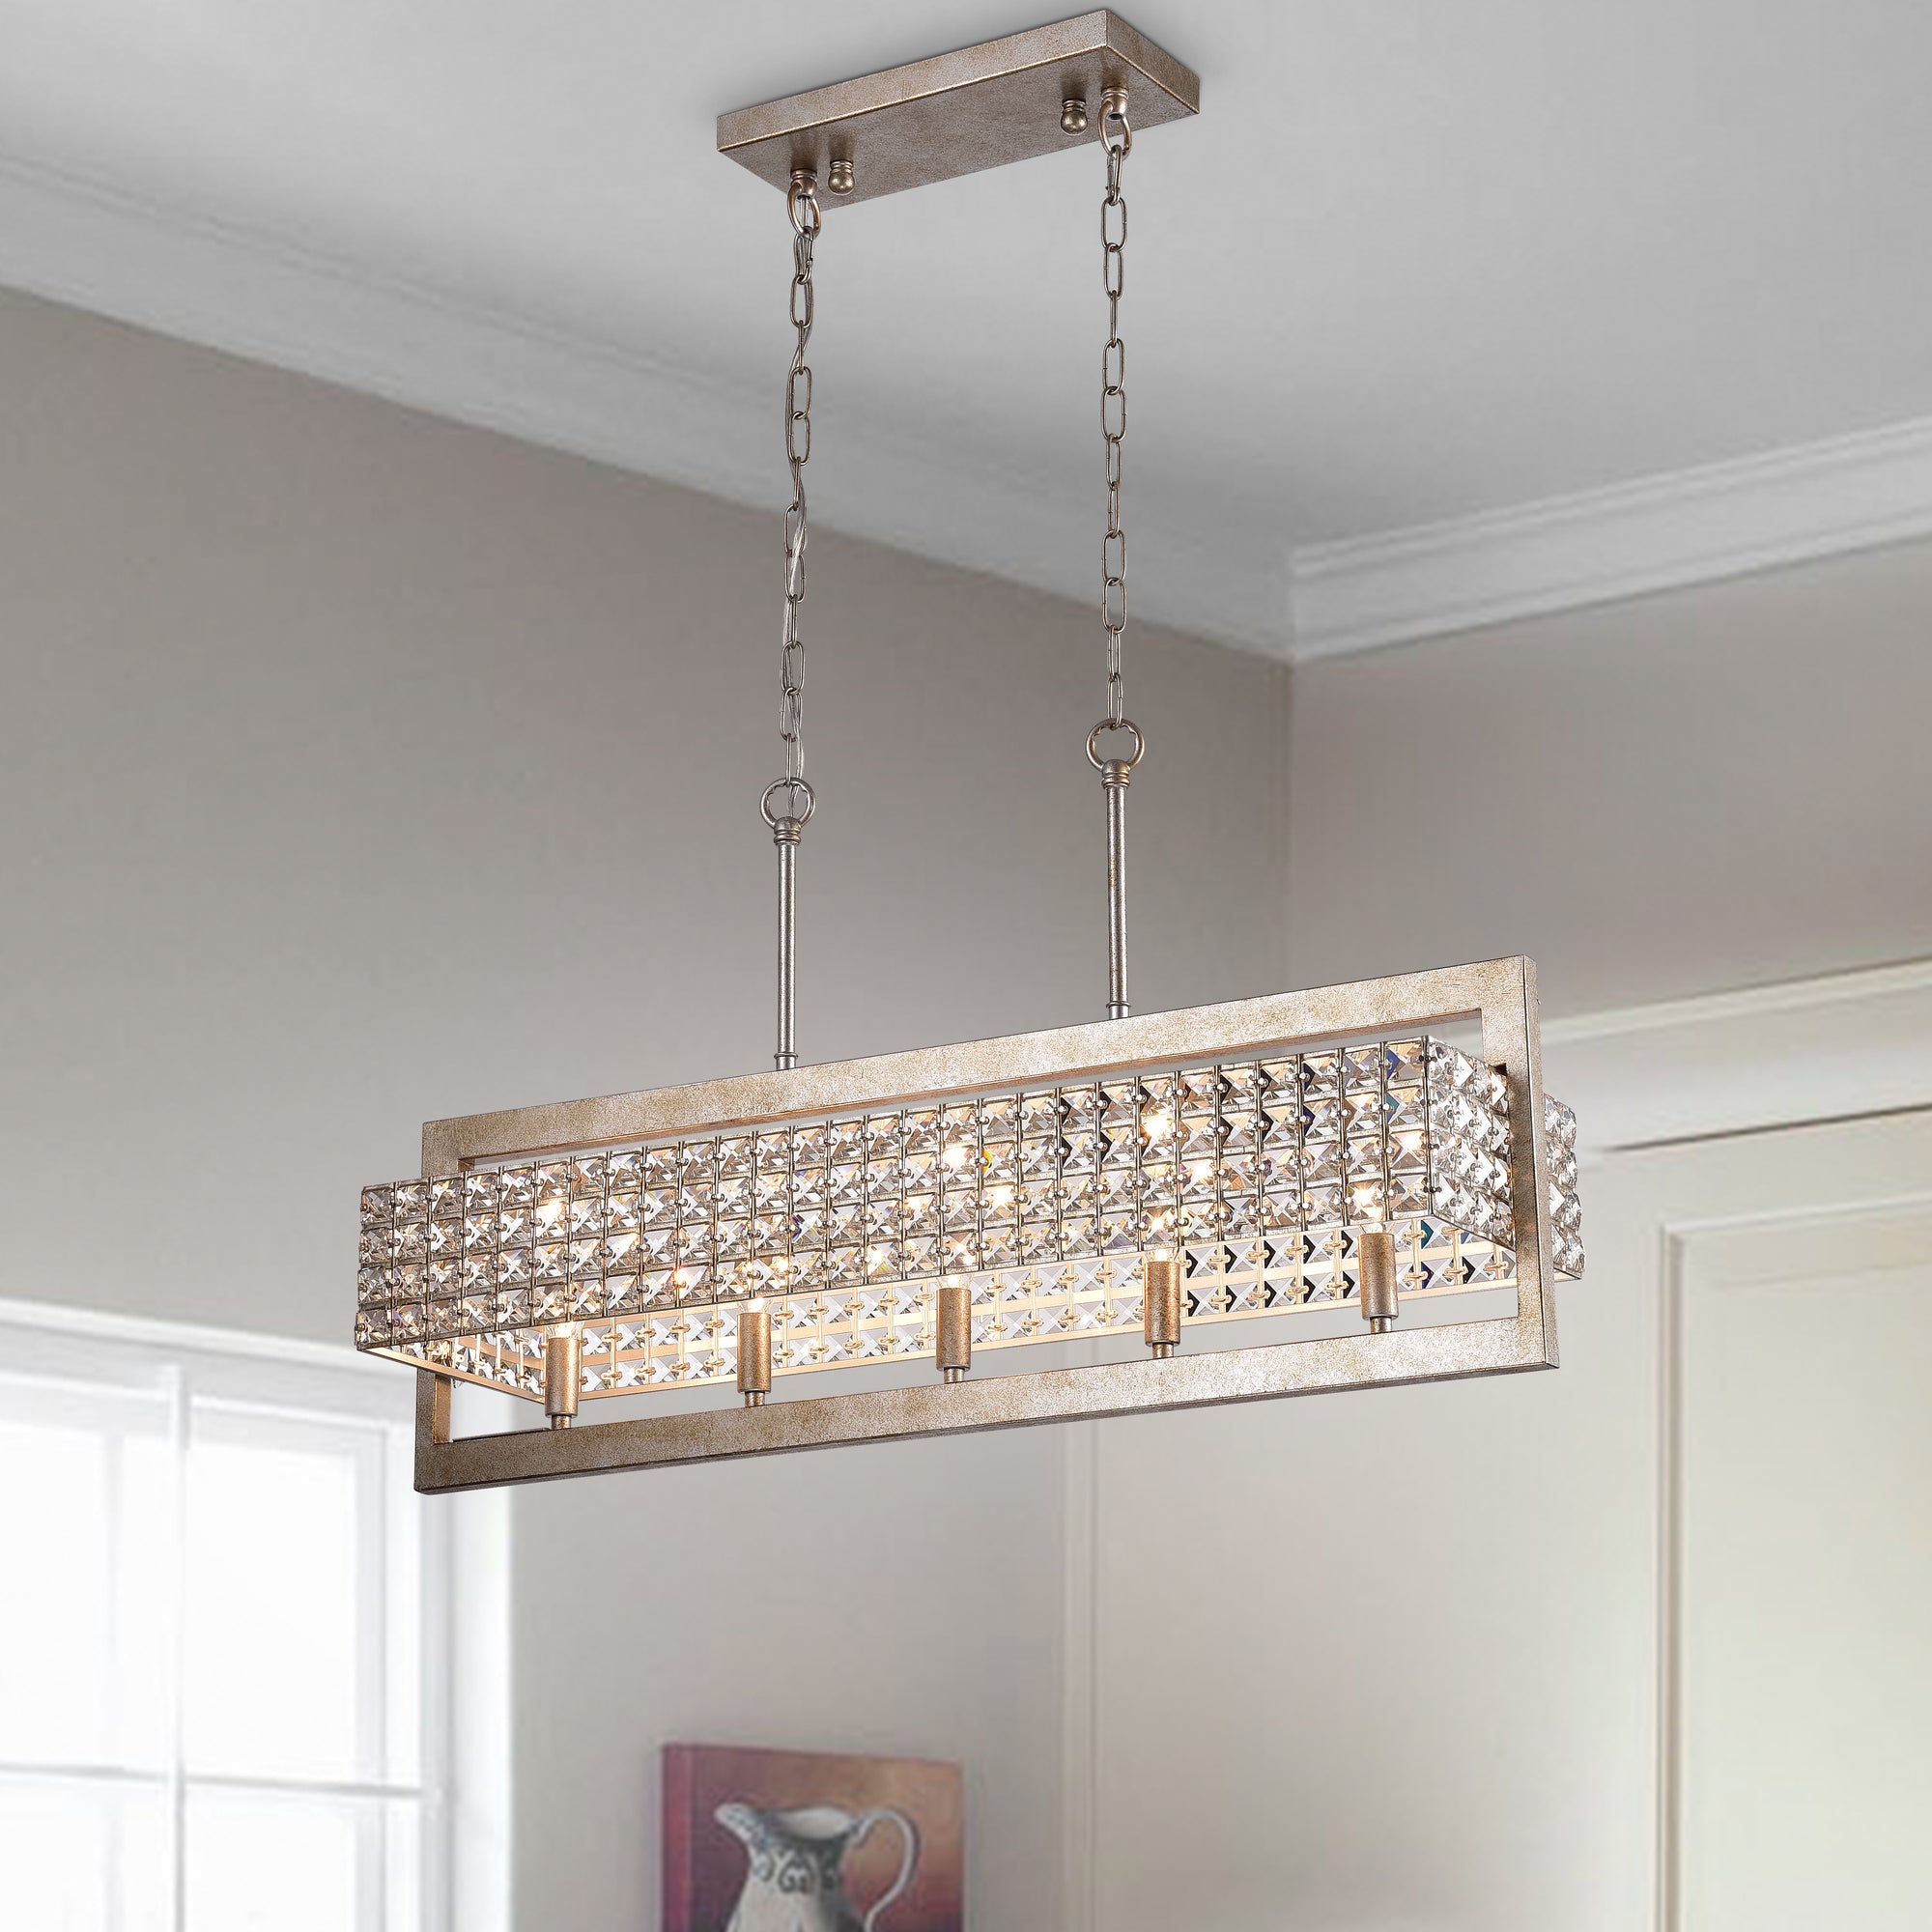 Amathea Rectangular Beaded 5-Light Chandelier for Dining/Living Room, Kitchen Island - Antique Silver